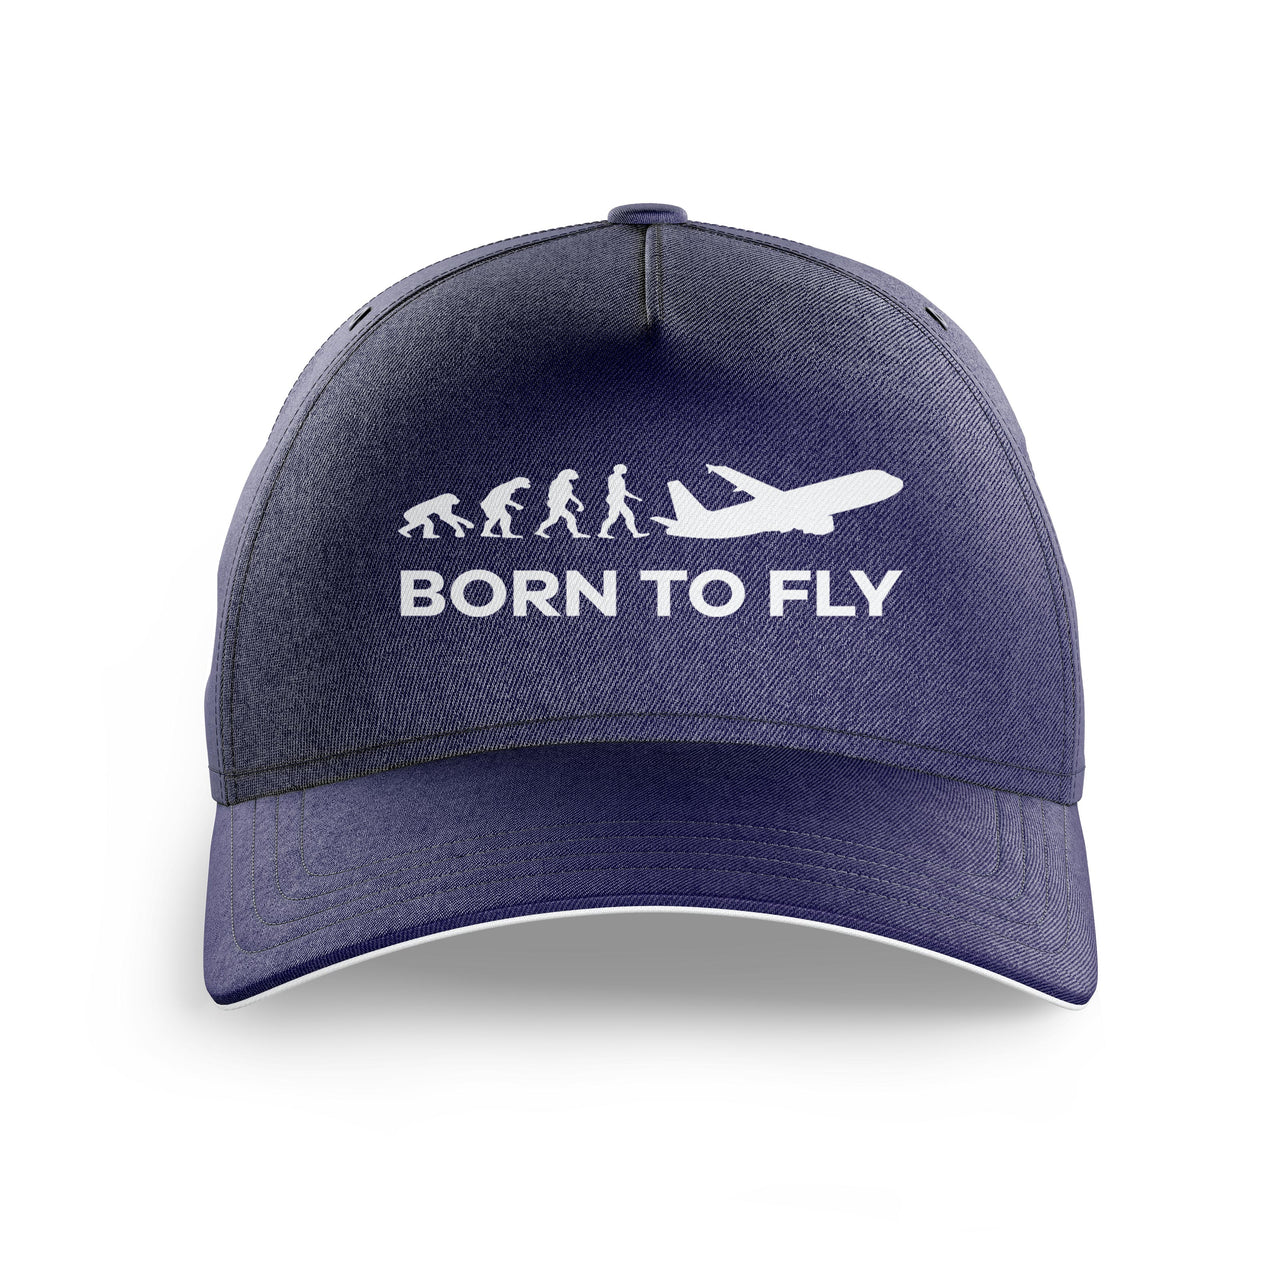 Born To Fly Aircraft Printed Hats